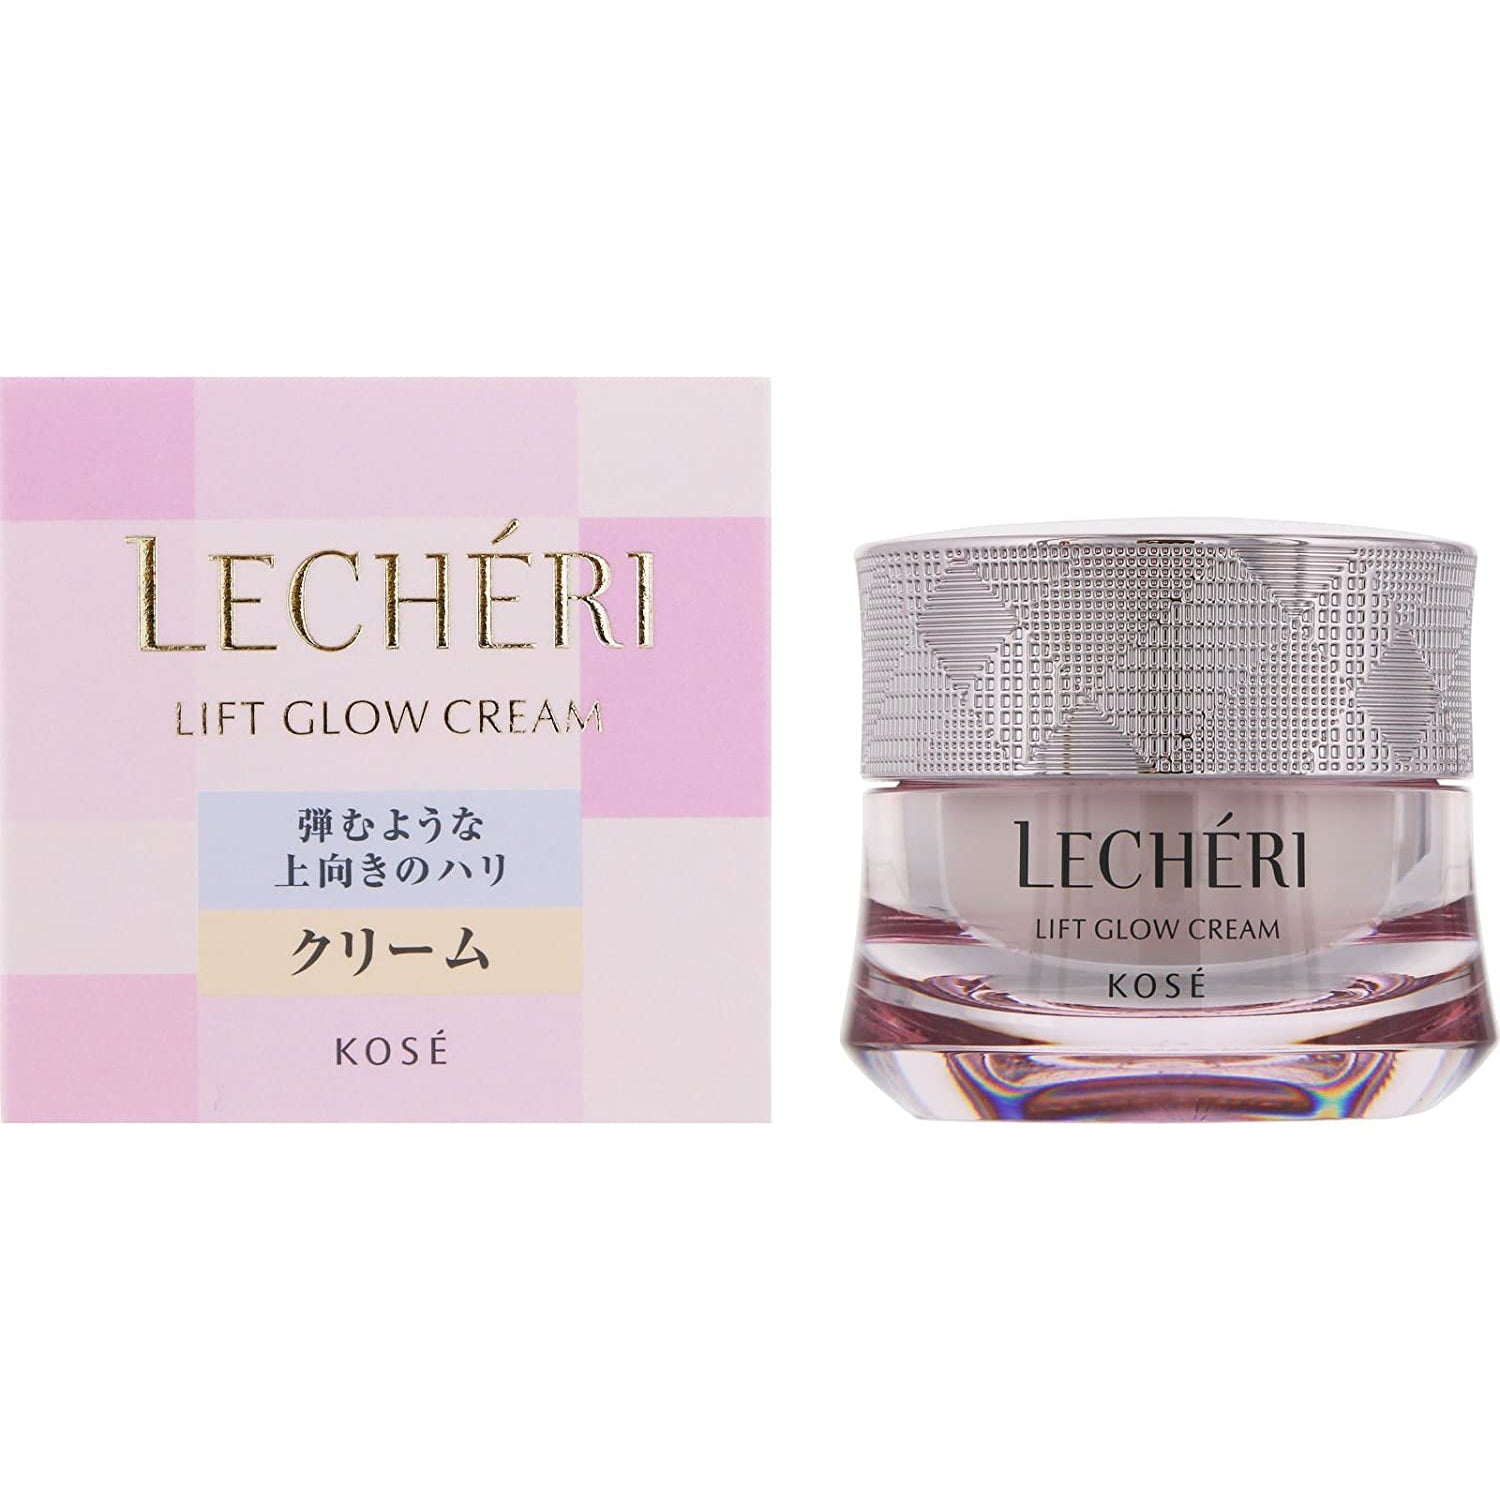 Kose Lecheri Lift Glow Cream Face Lifting Skin Glowing Cream 40g